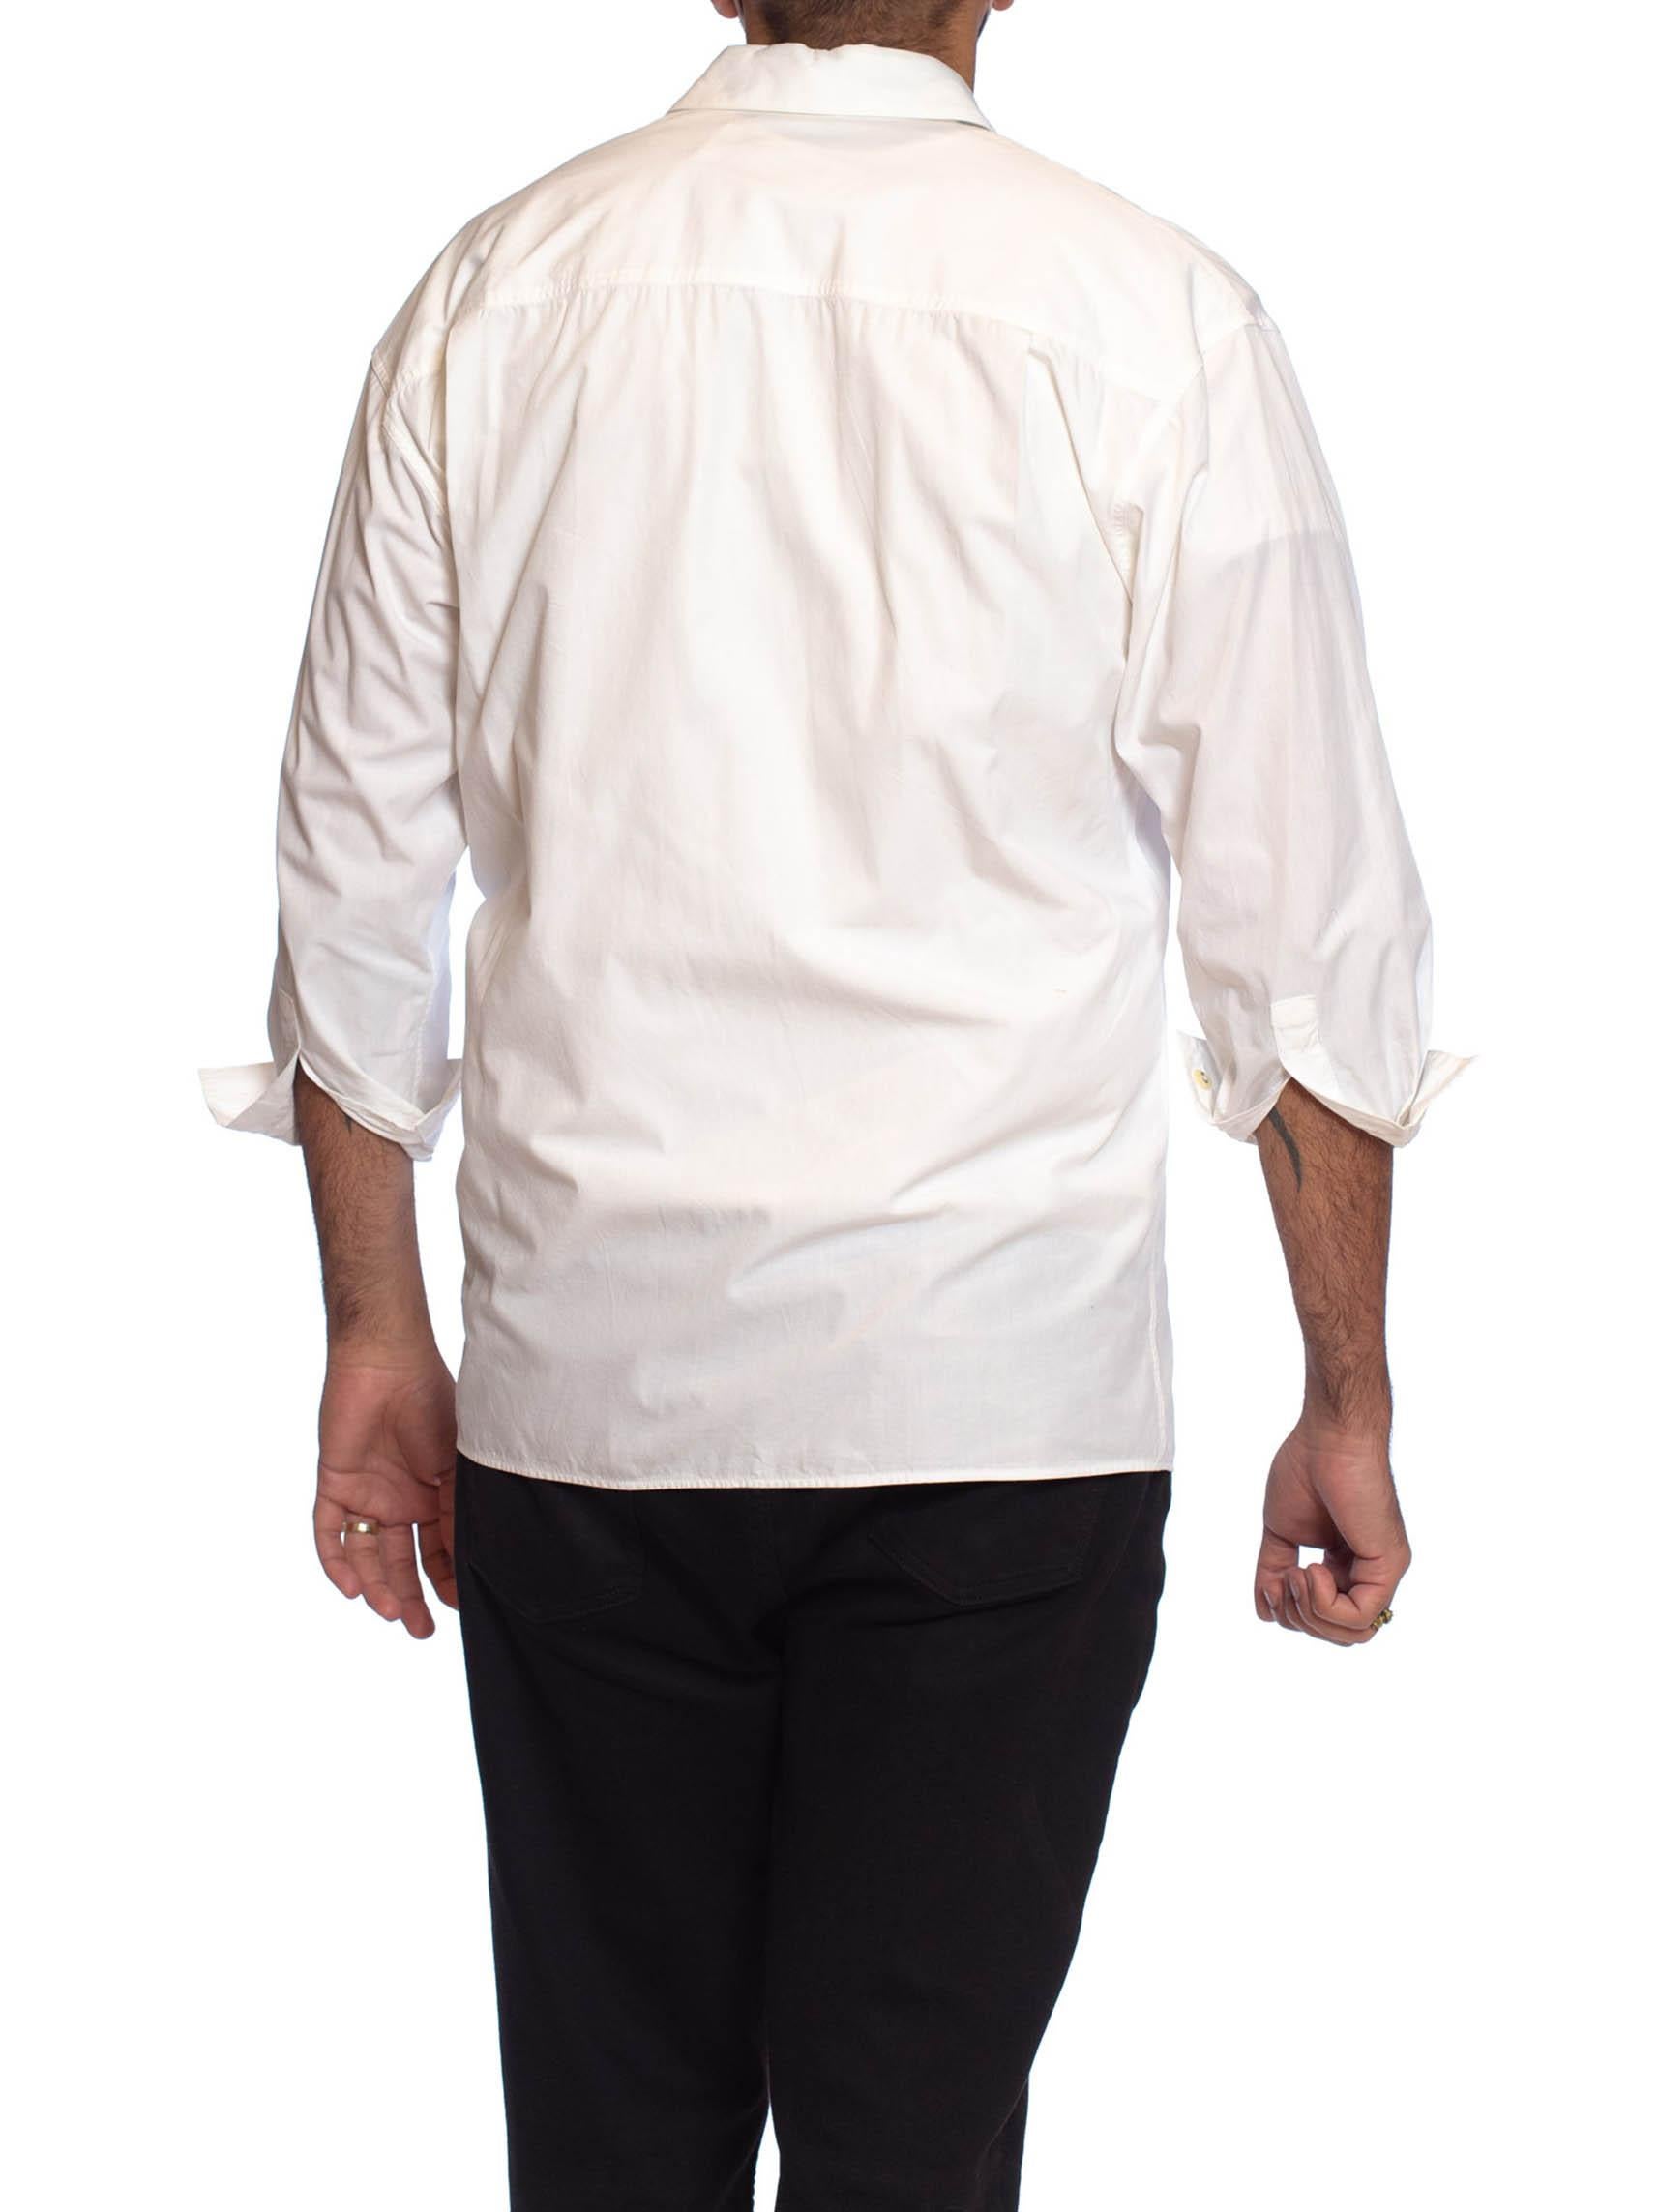 1980S CLAUDE MONTANA White Cotton Mens Shirt With Zipper Details 3